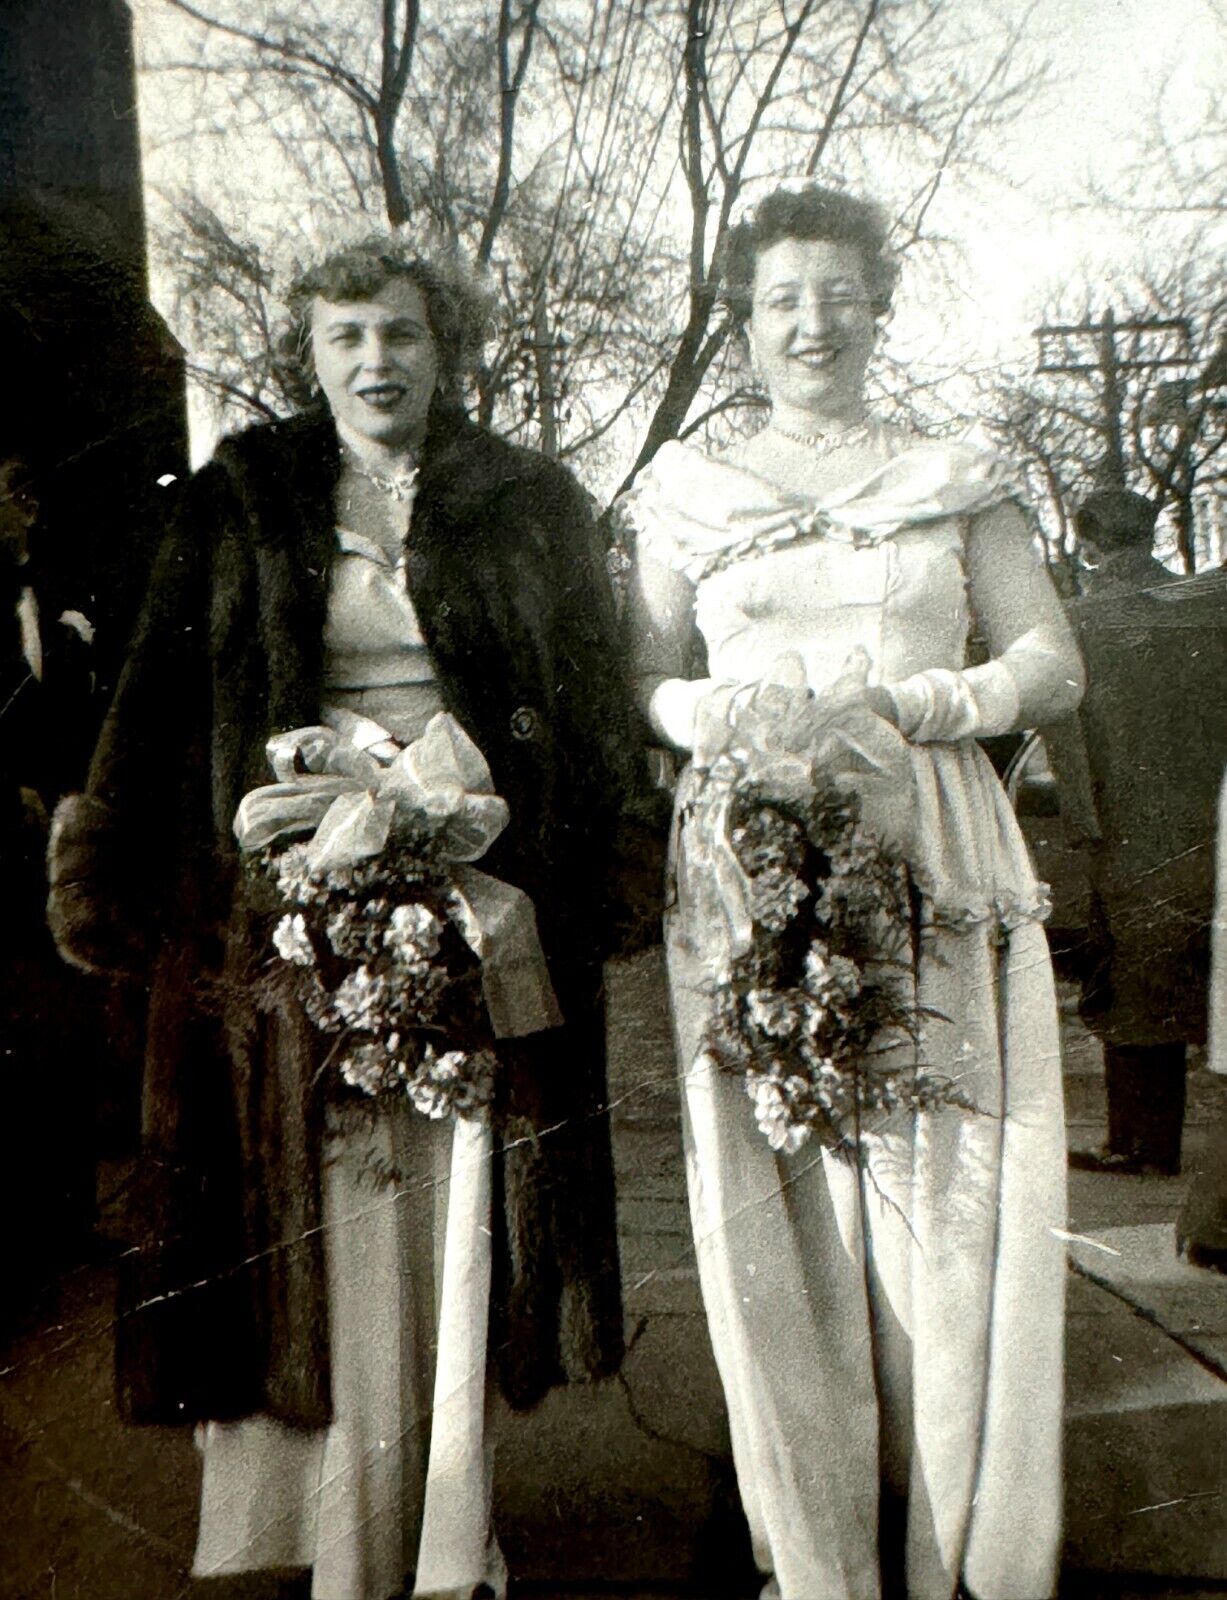 1950s Two Brides Pretty Young Women Female Vintage Photo B&W Snapshot